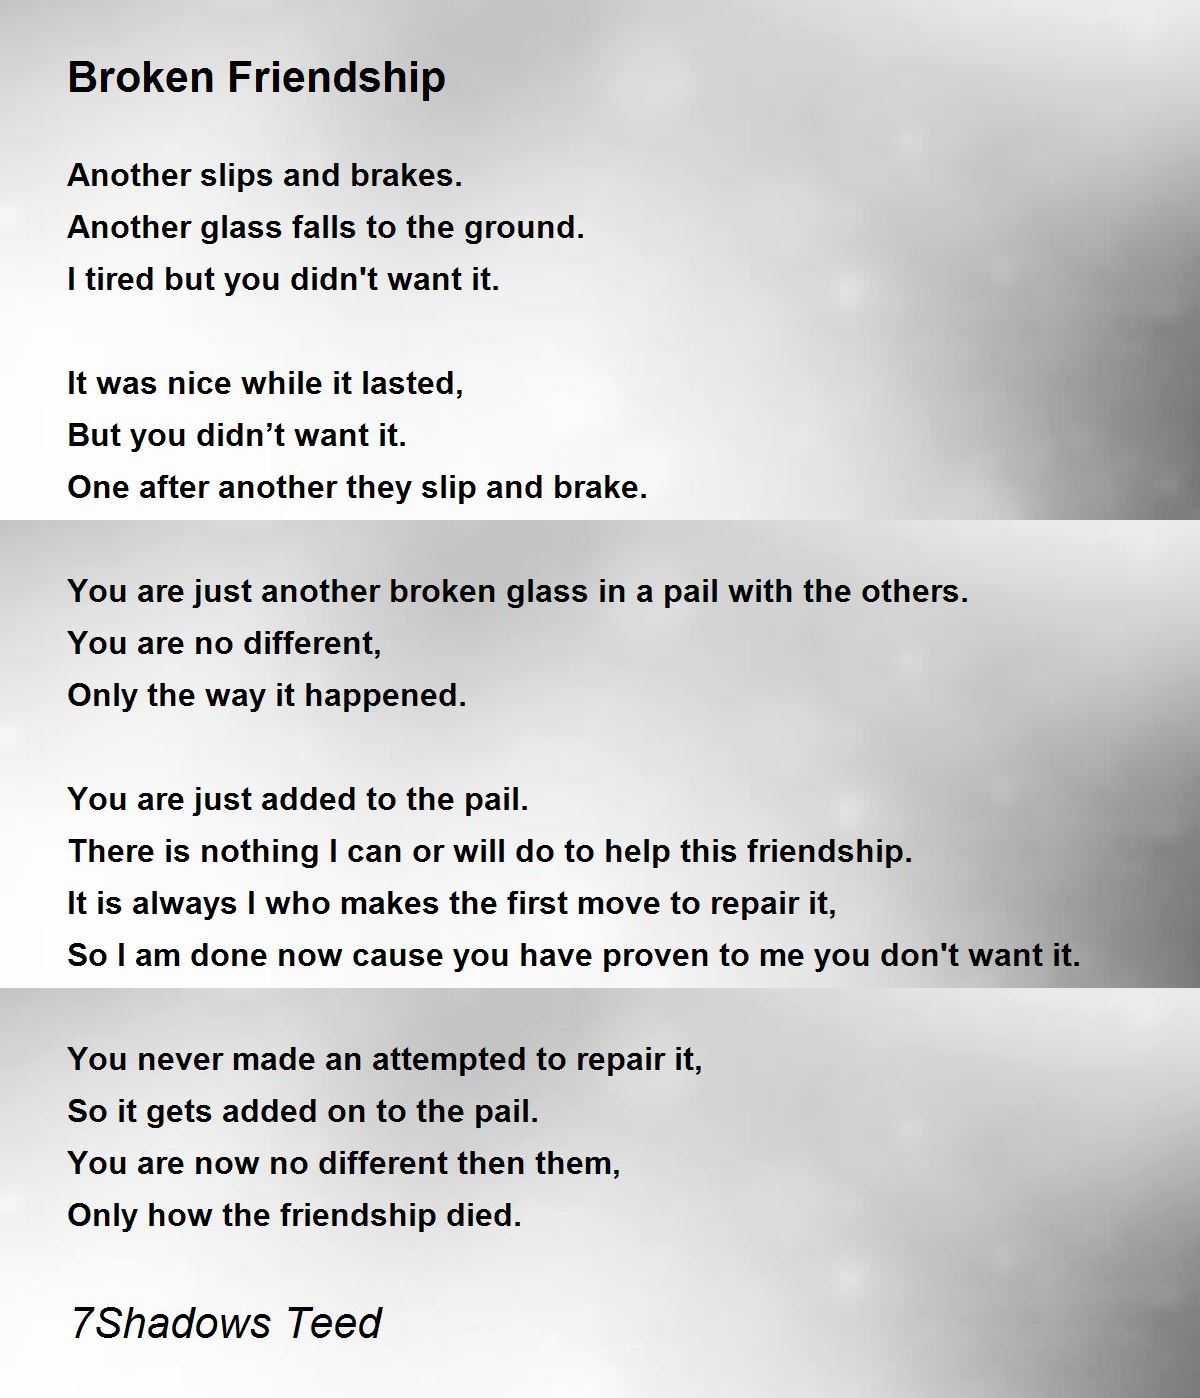 Broken Friendship - Broken Friendship Poem by 7Shadows Teed